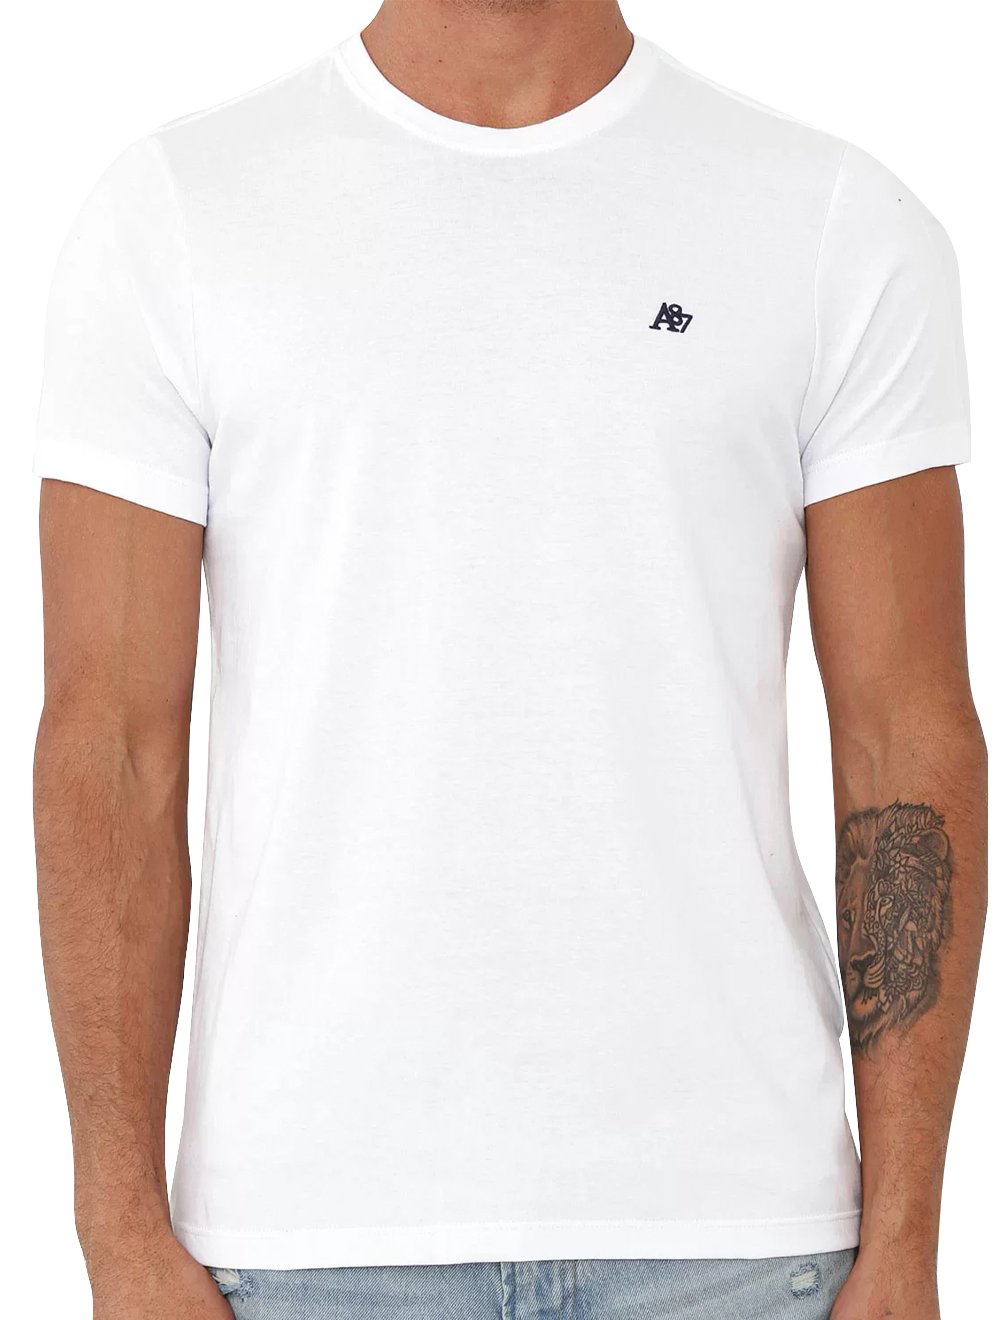 Camiseta Aeropostale Masculina Embroidered Navy Logo A87 Branca